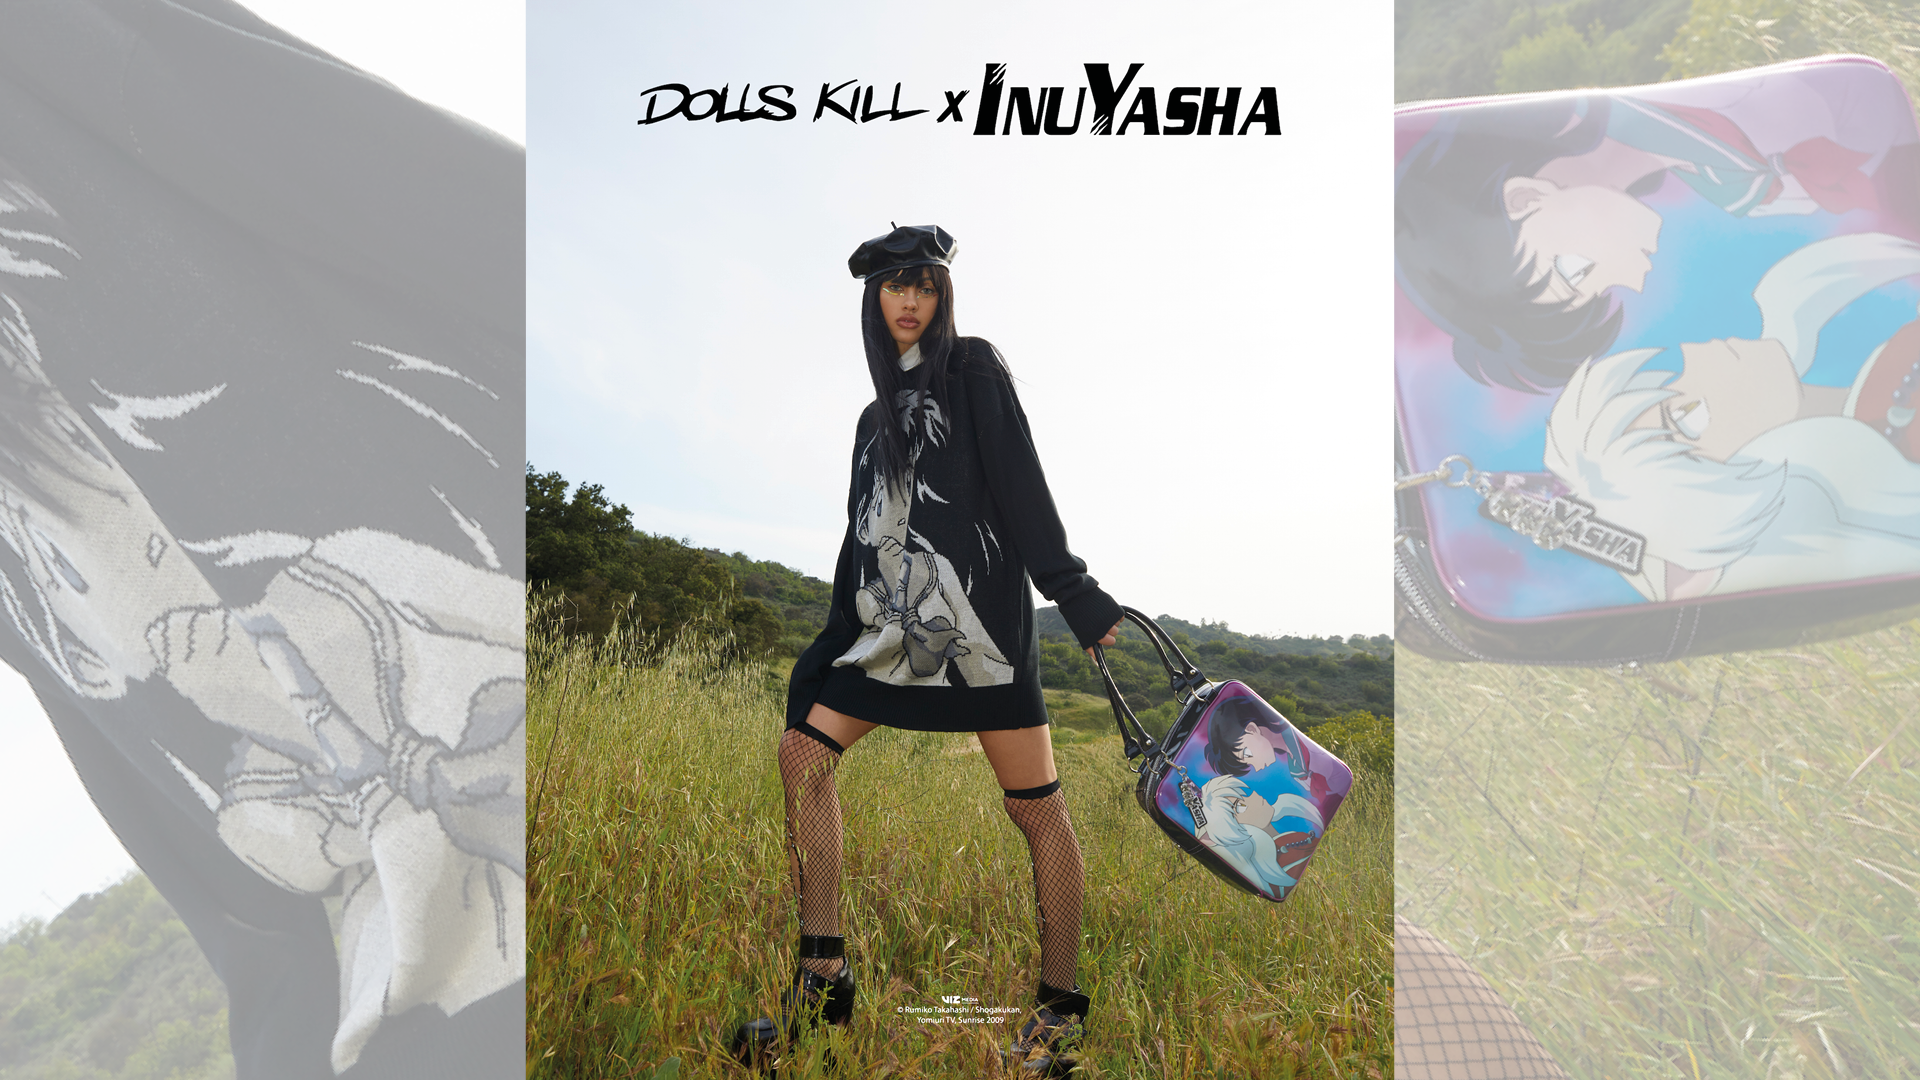 Dolls Kill x “Inuyasha” apparel line.